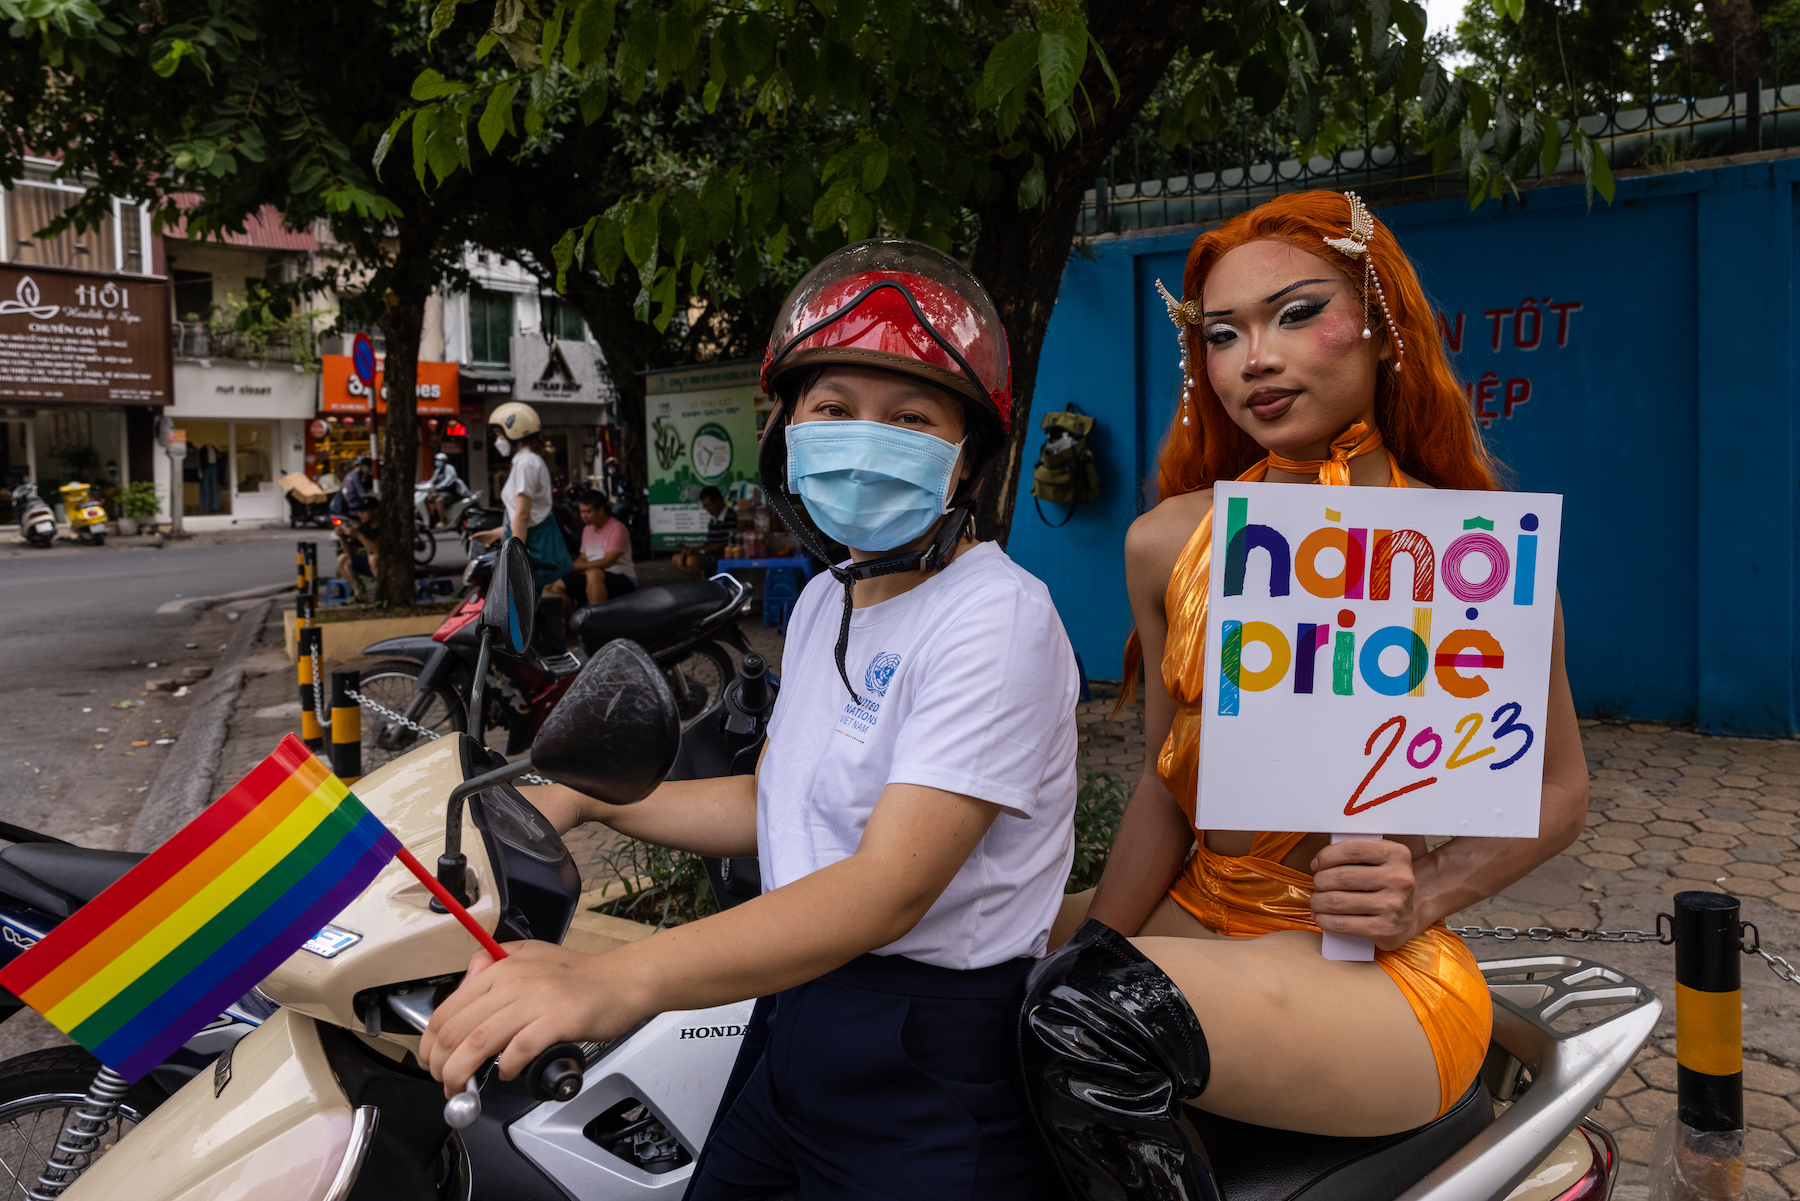 bike riding pride parade in hanoi vietnam 2023